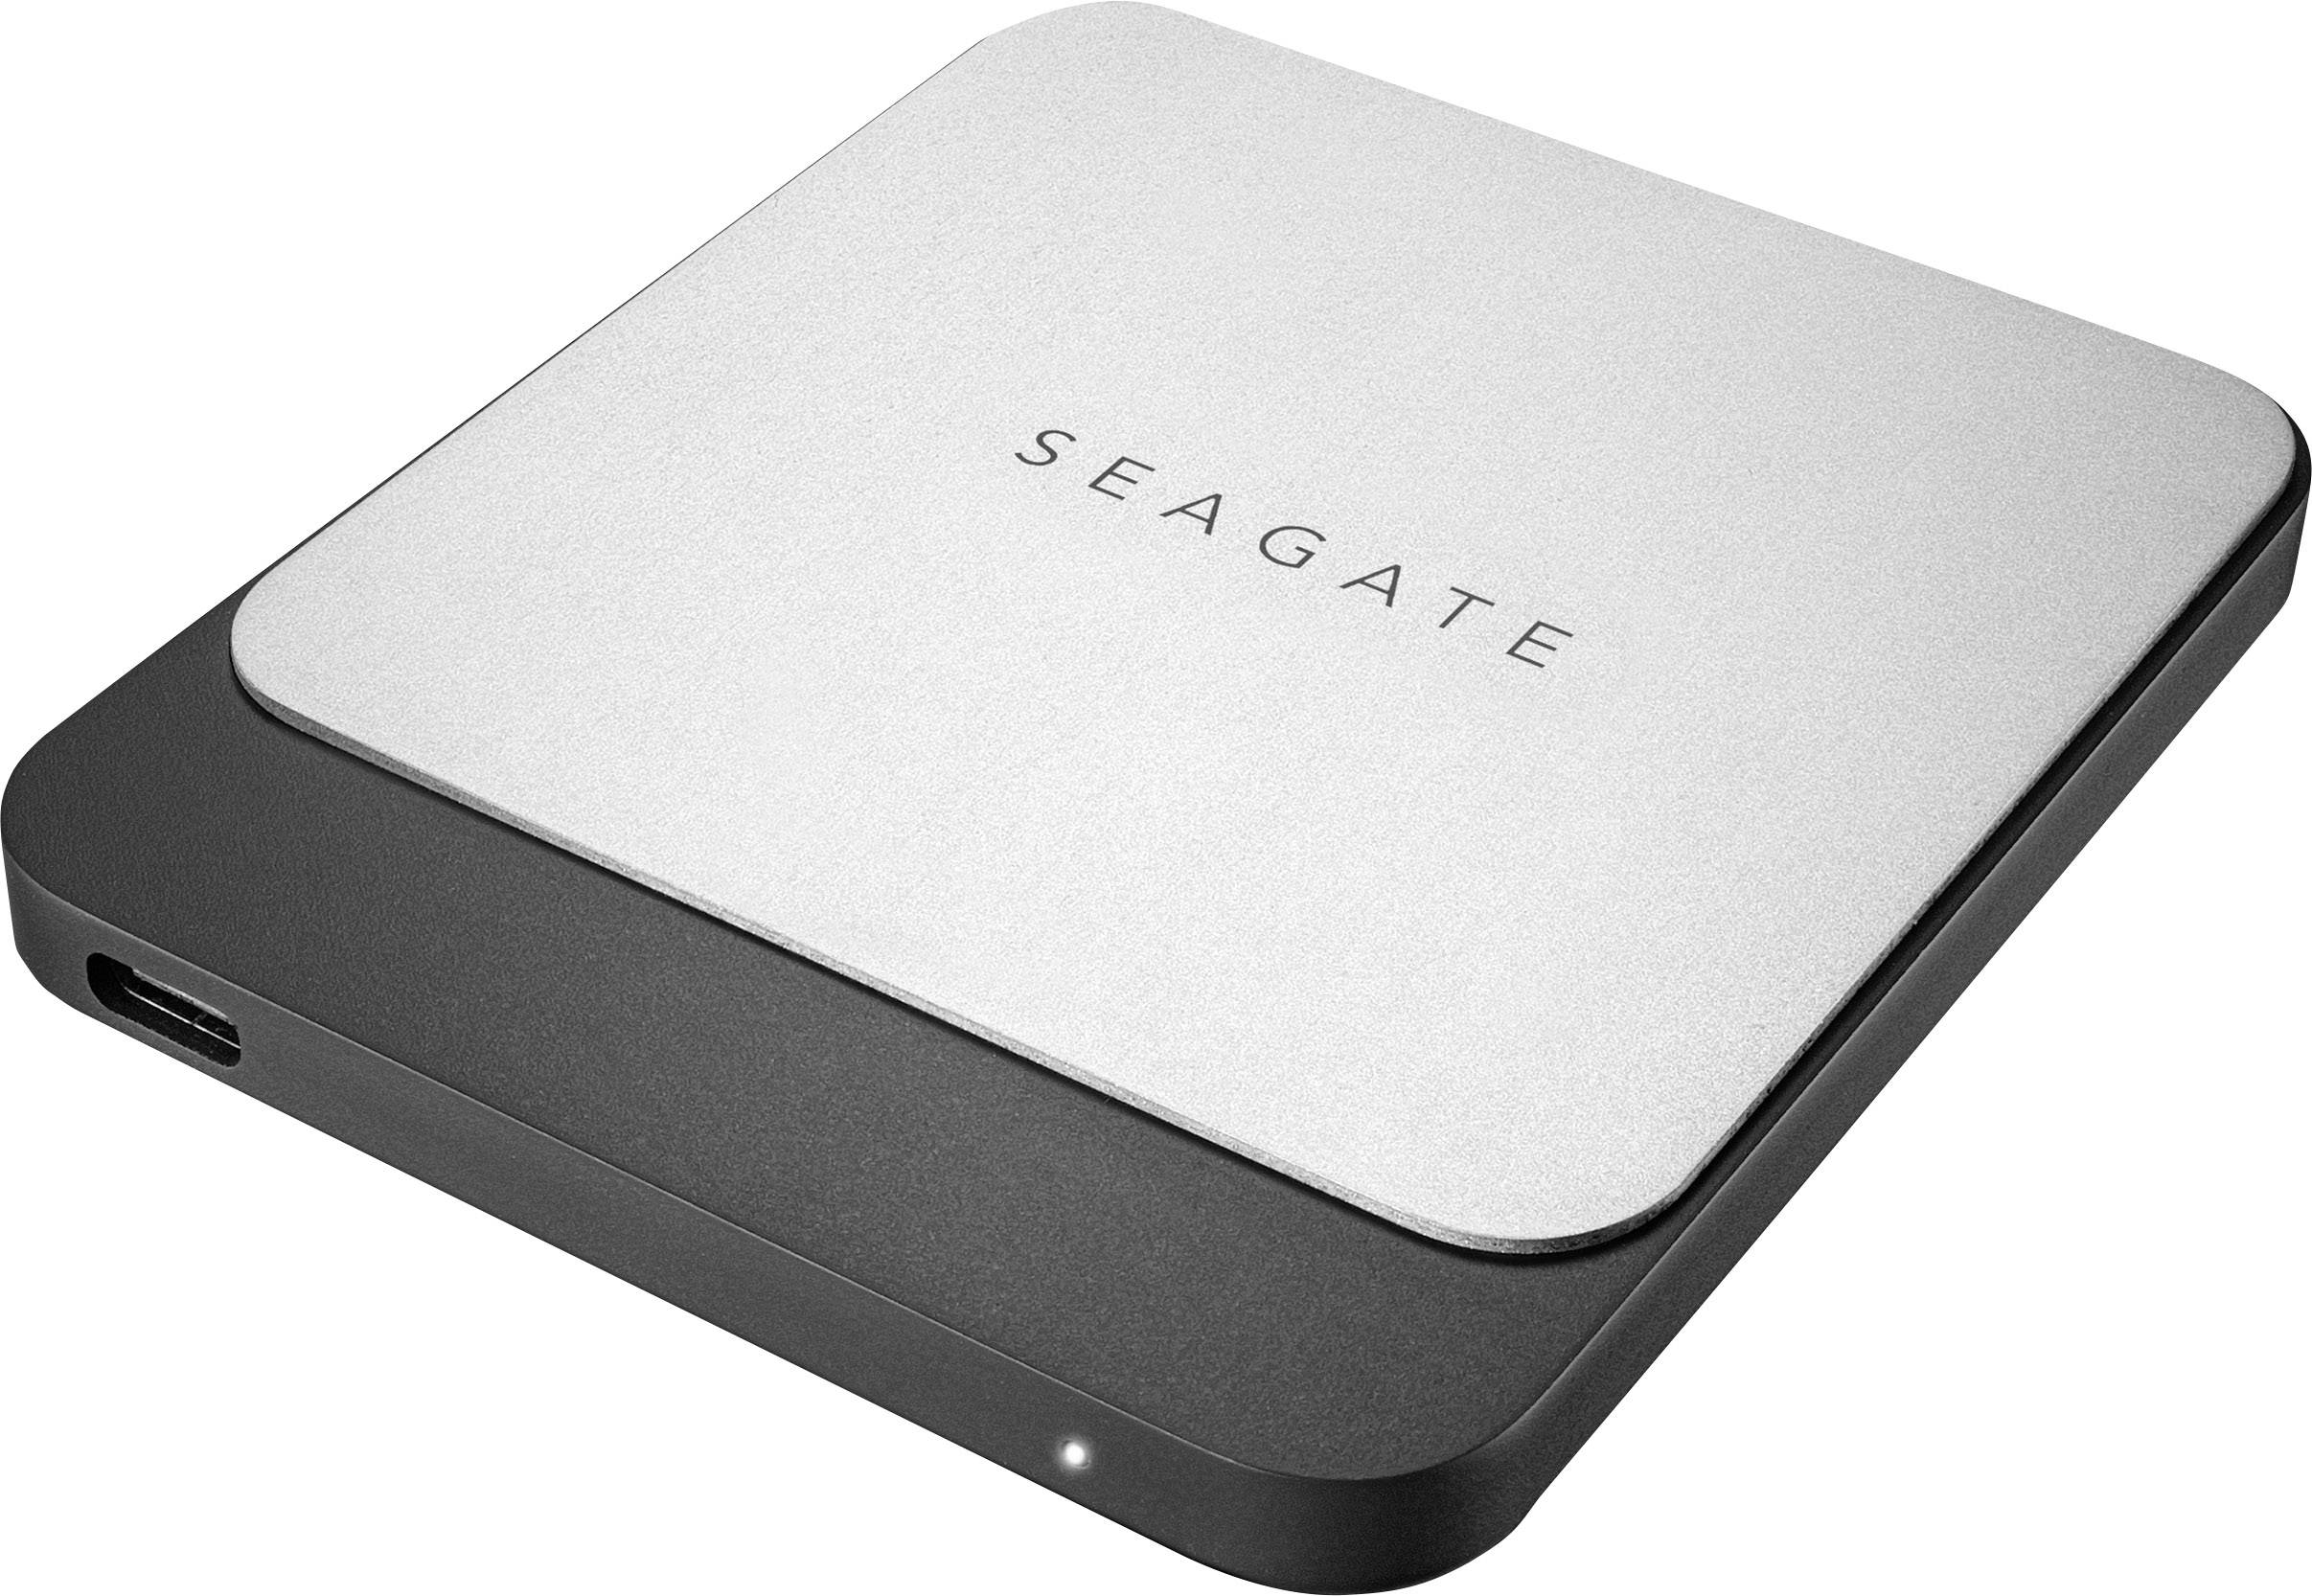 Seagate Fast Externe SSD Festplatte 250 GB Schwarz/Silber